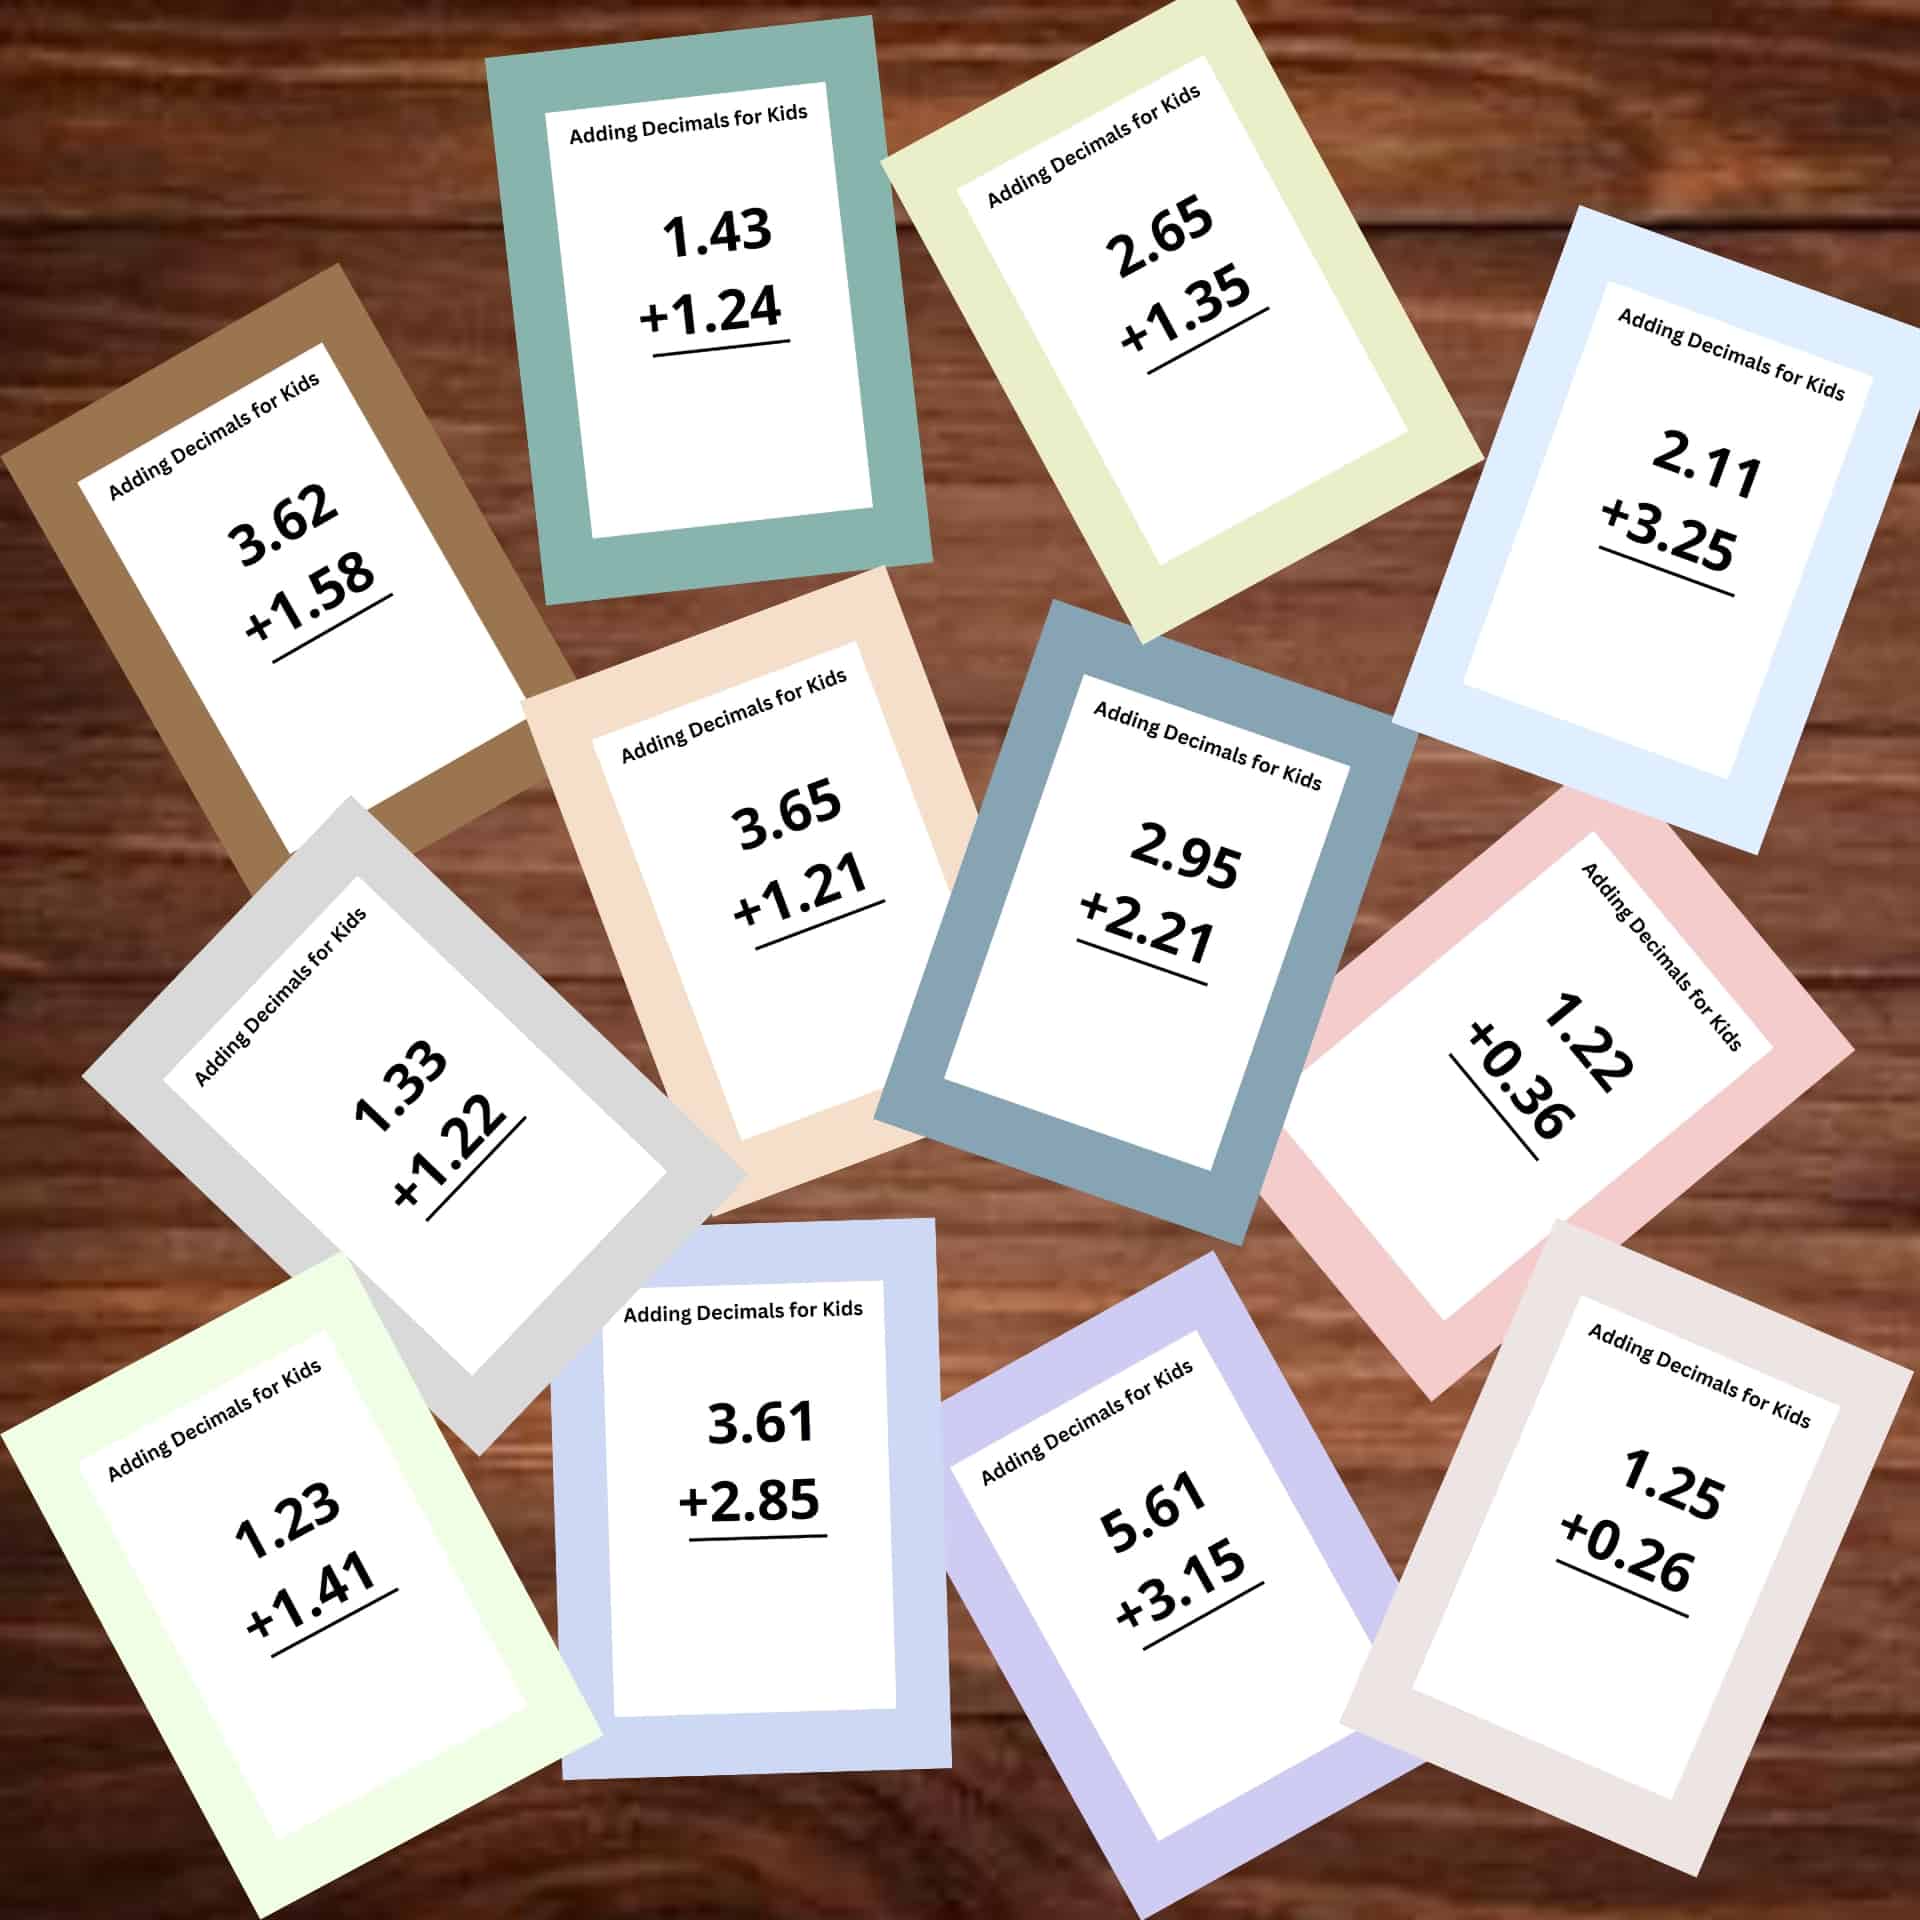 cards of adding decimals for kids